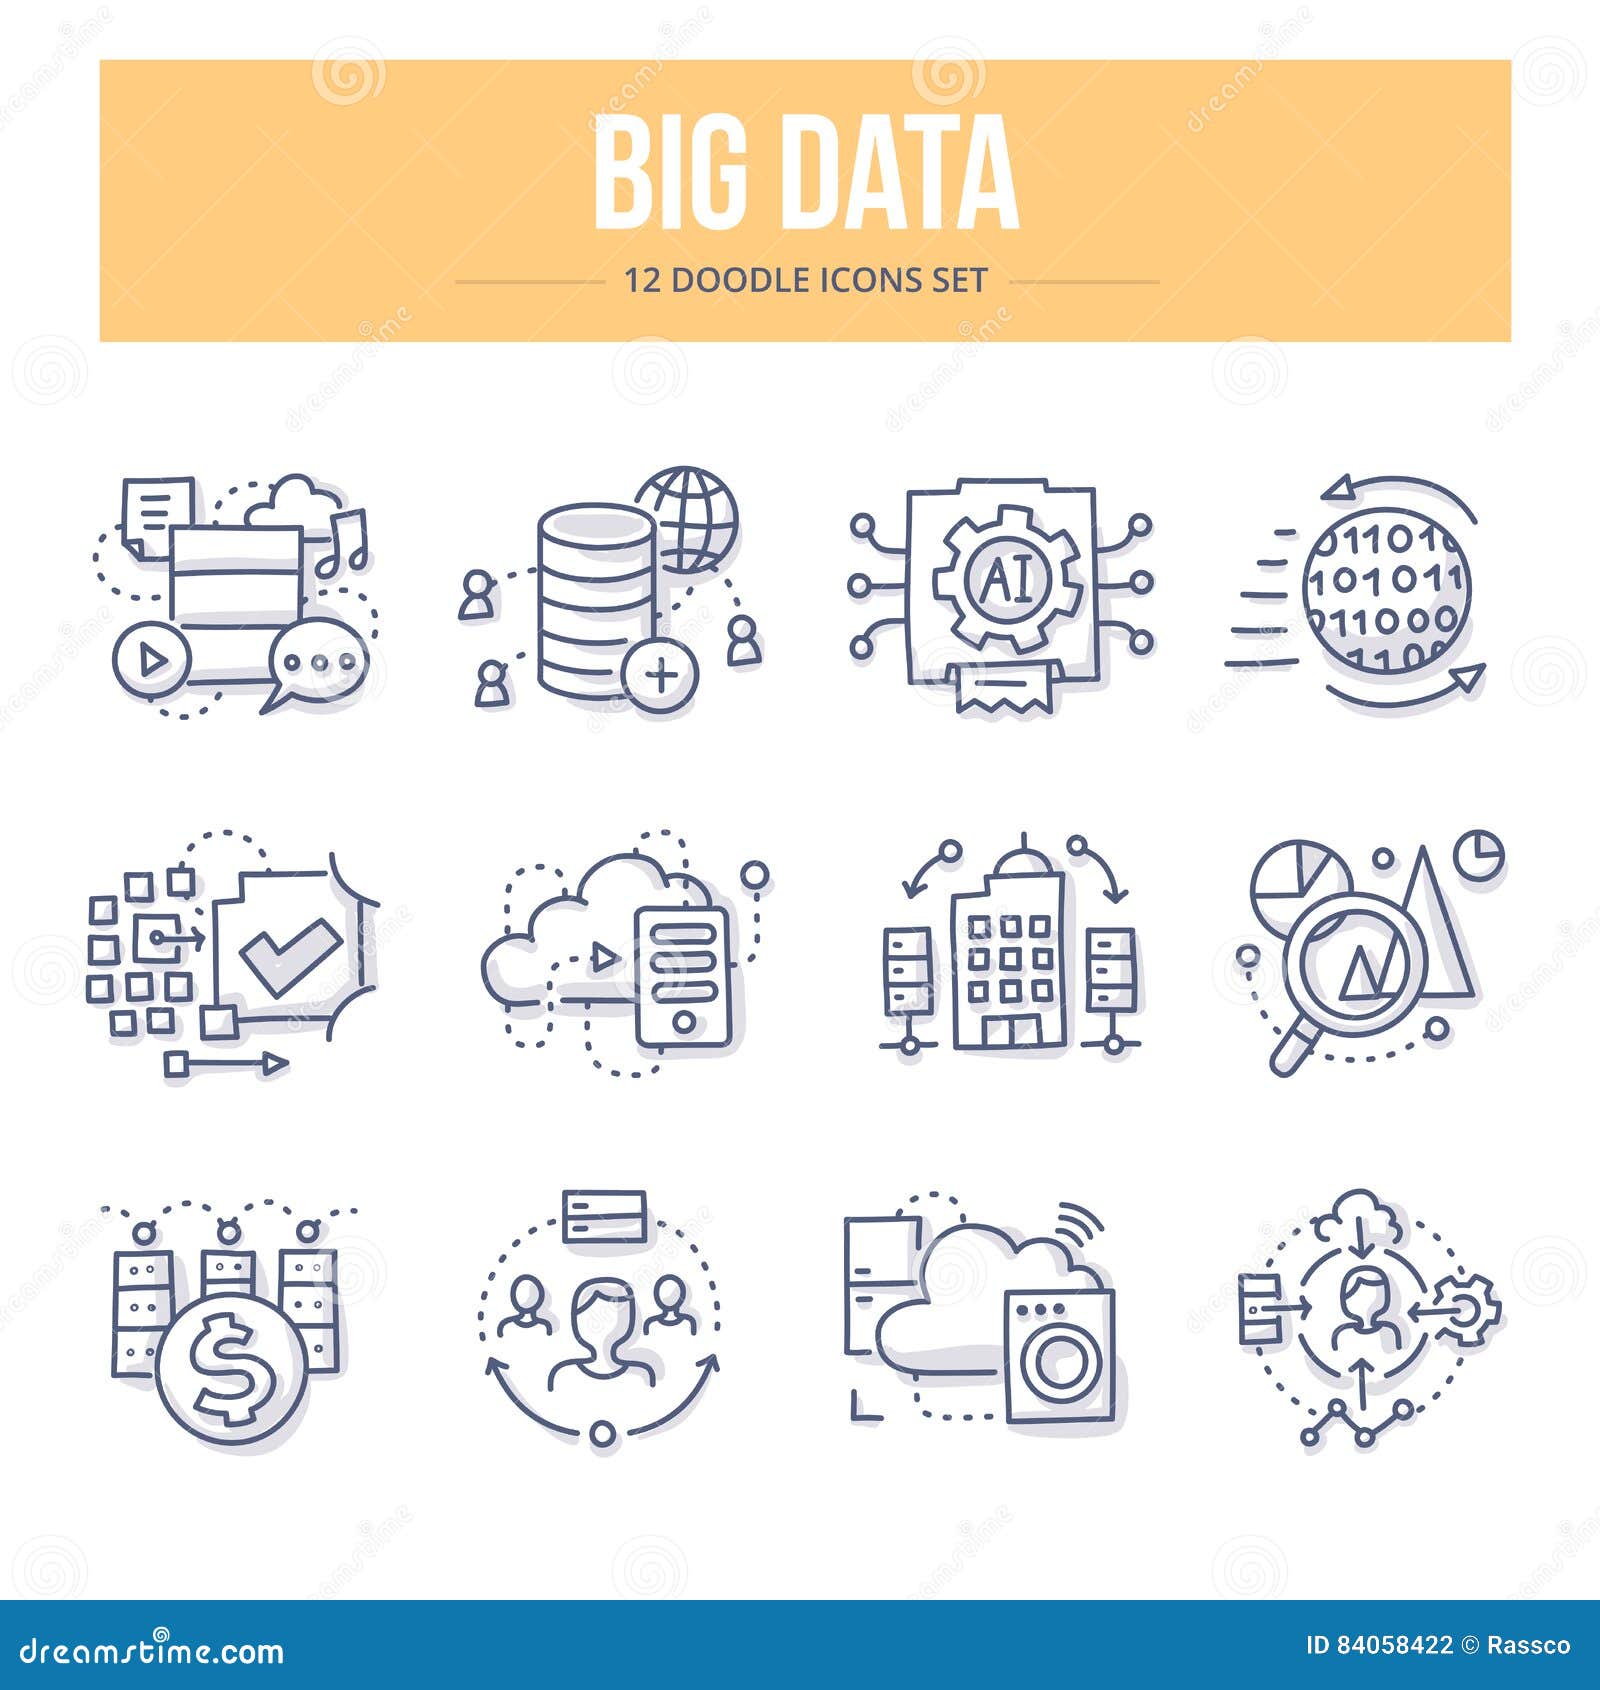 big data doodle icons